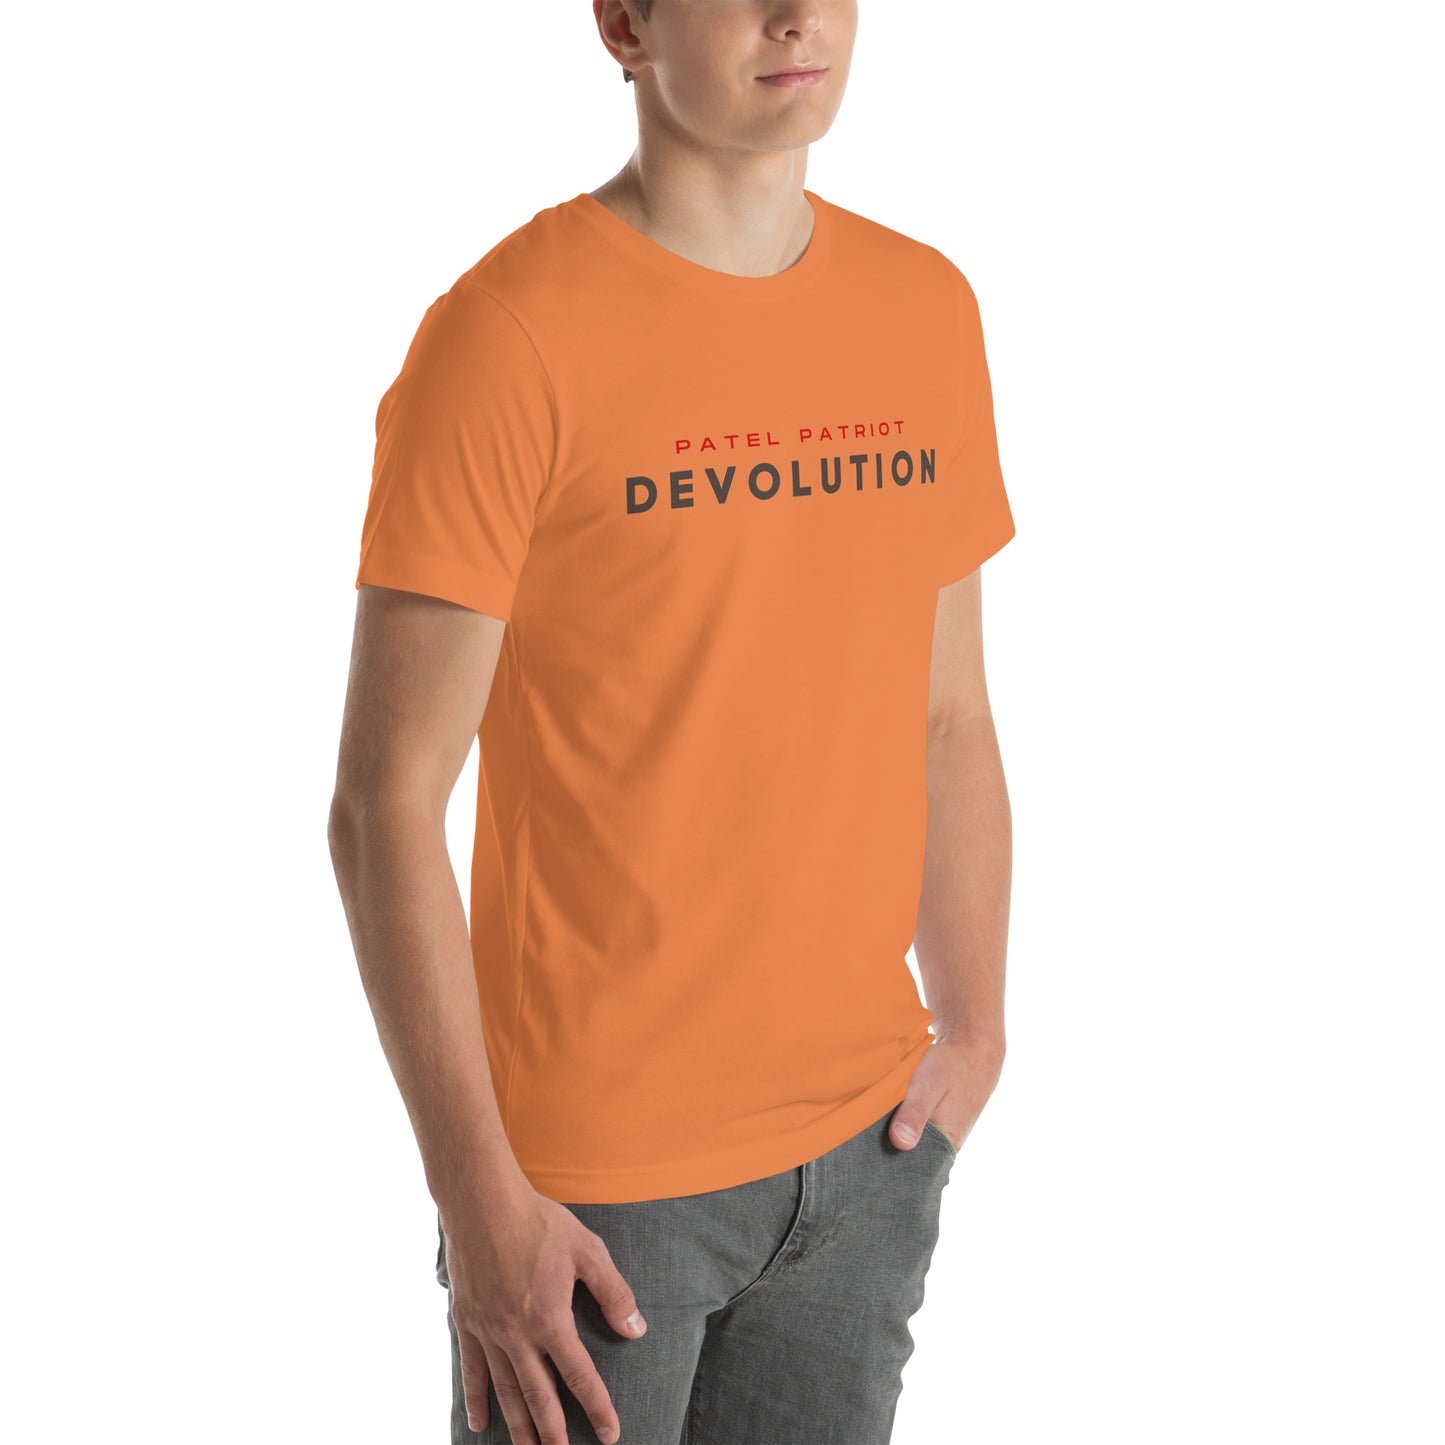 Devolution Unisex t-shirt (gray and red logo)